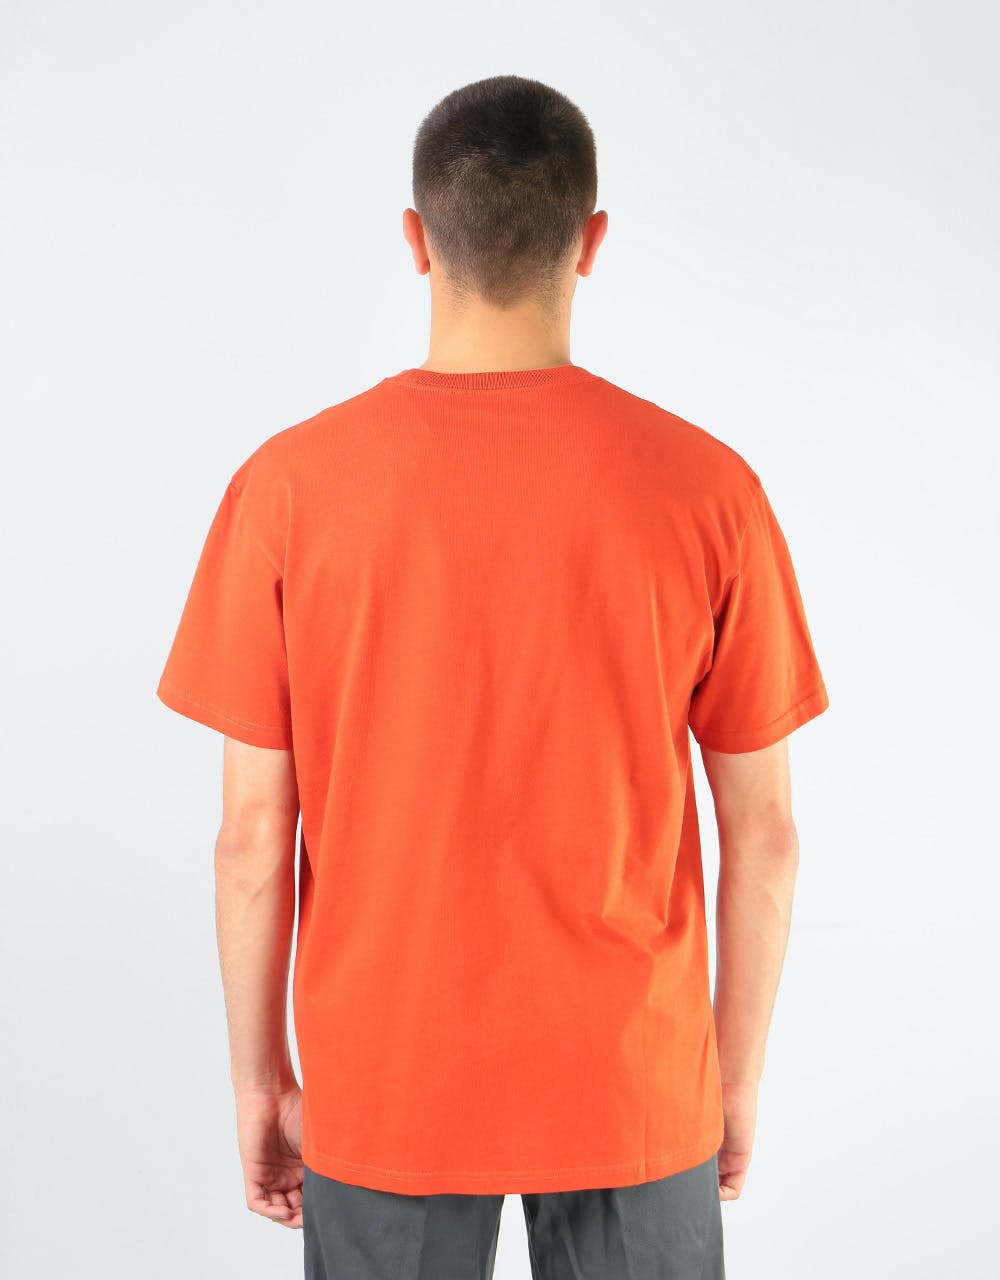 Carhartt WIP S/S Chase T-Shirt - Brick Orange/Gold